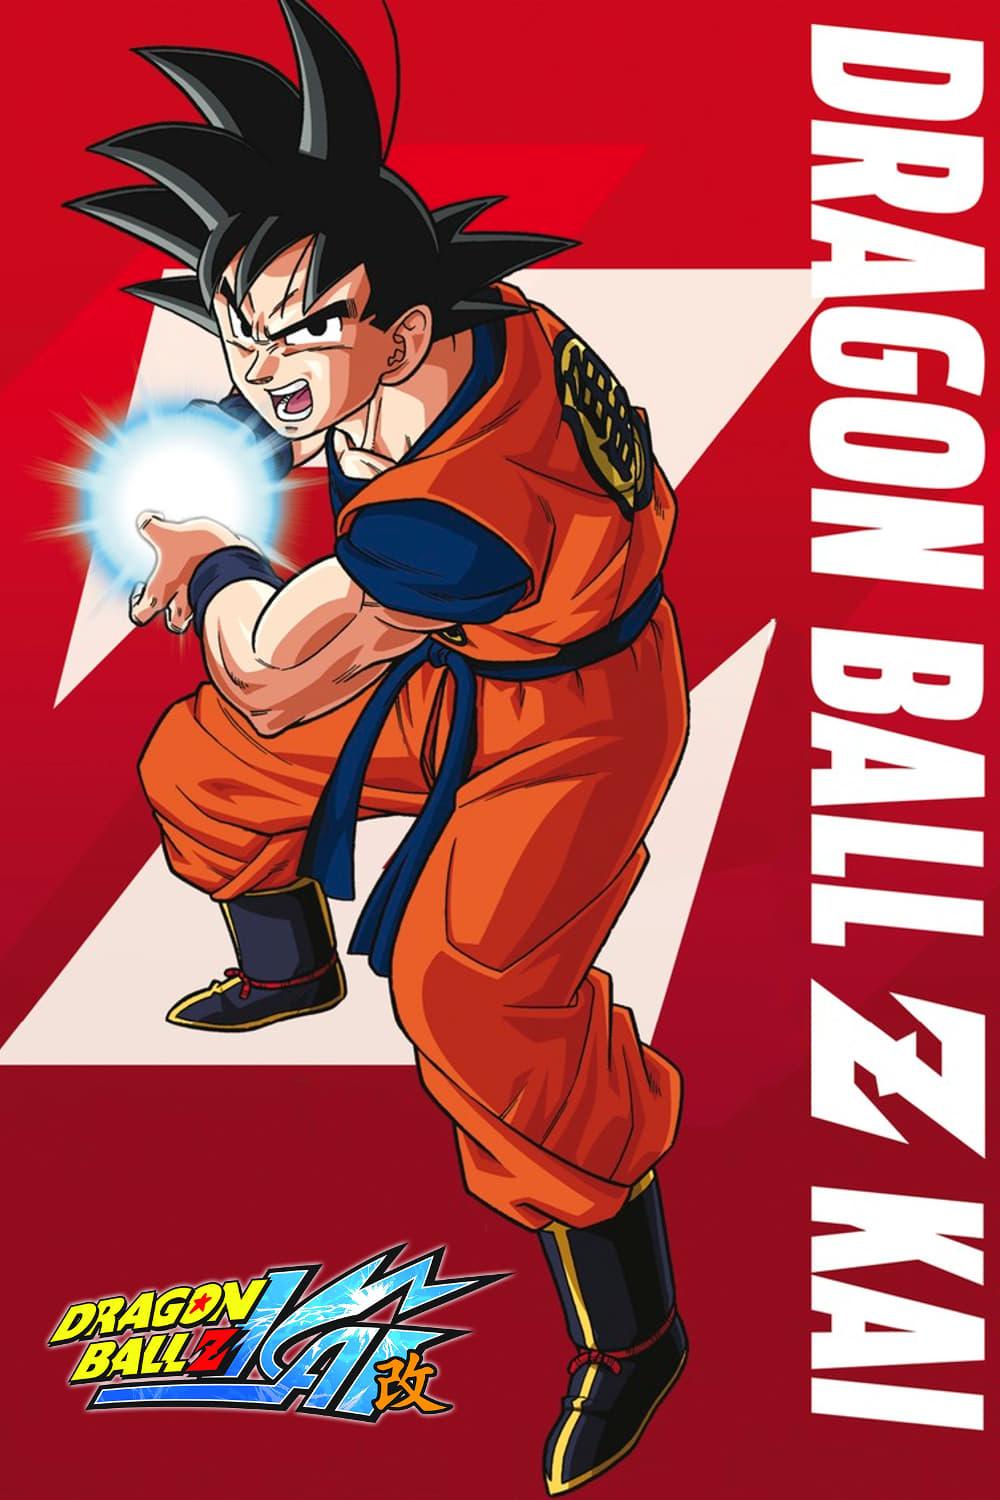 Dragon Ball Z Kai poster